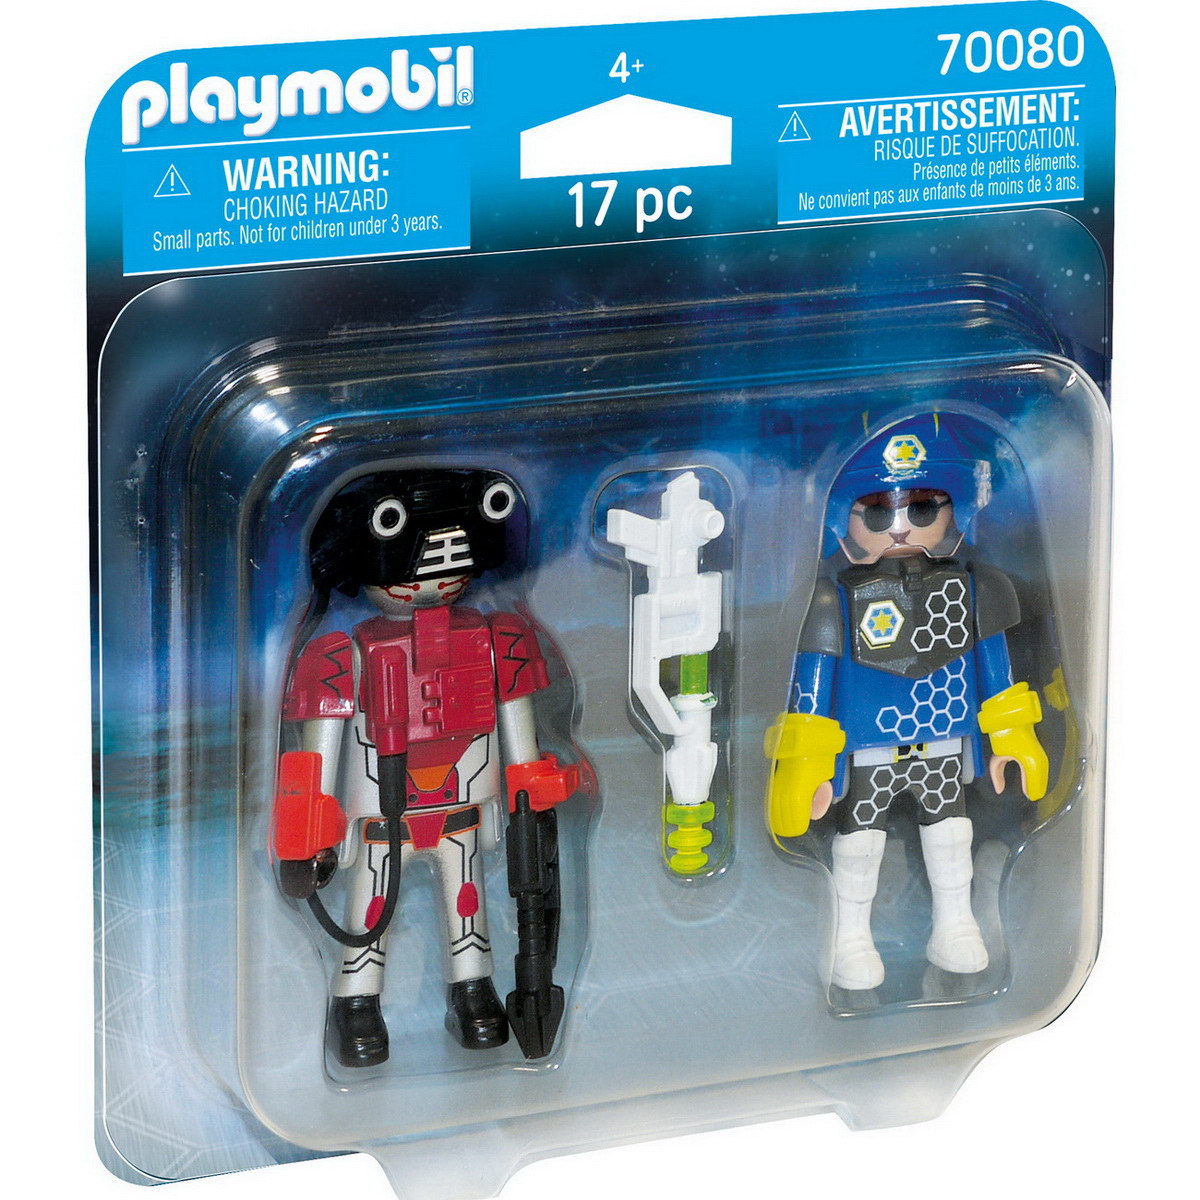 Playmobil 70080 - Spacepolizist und Ganove Duo Pack